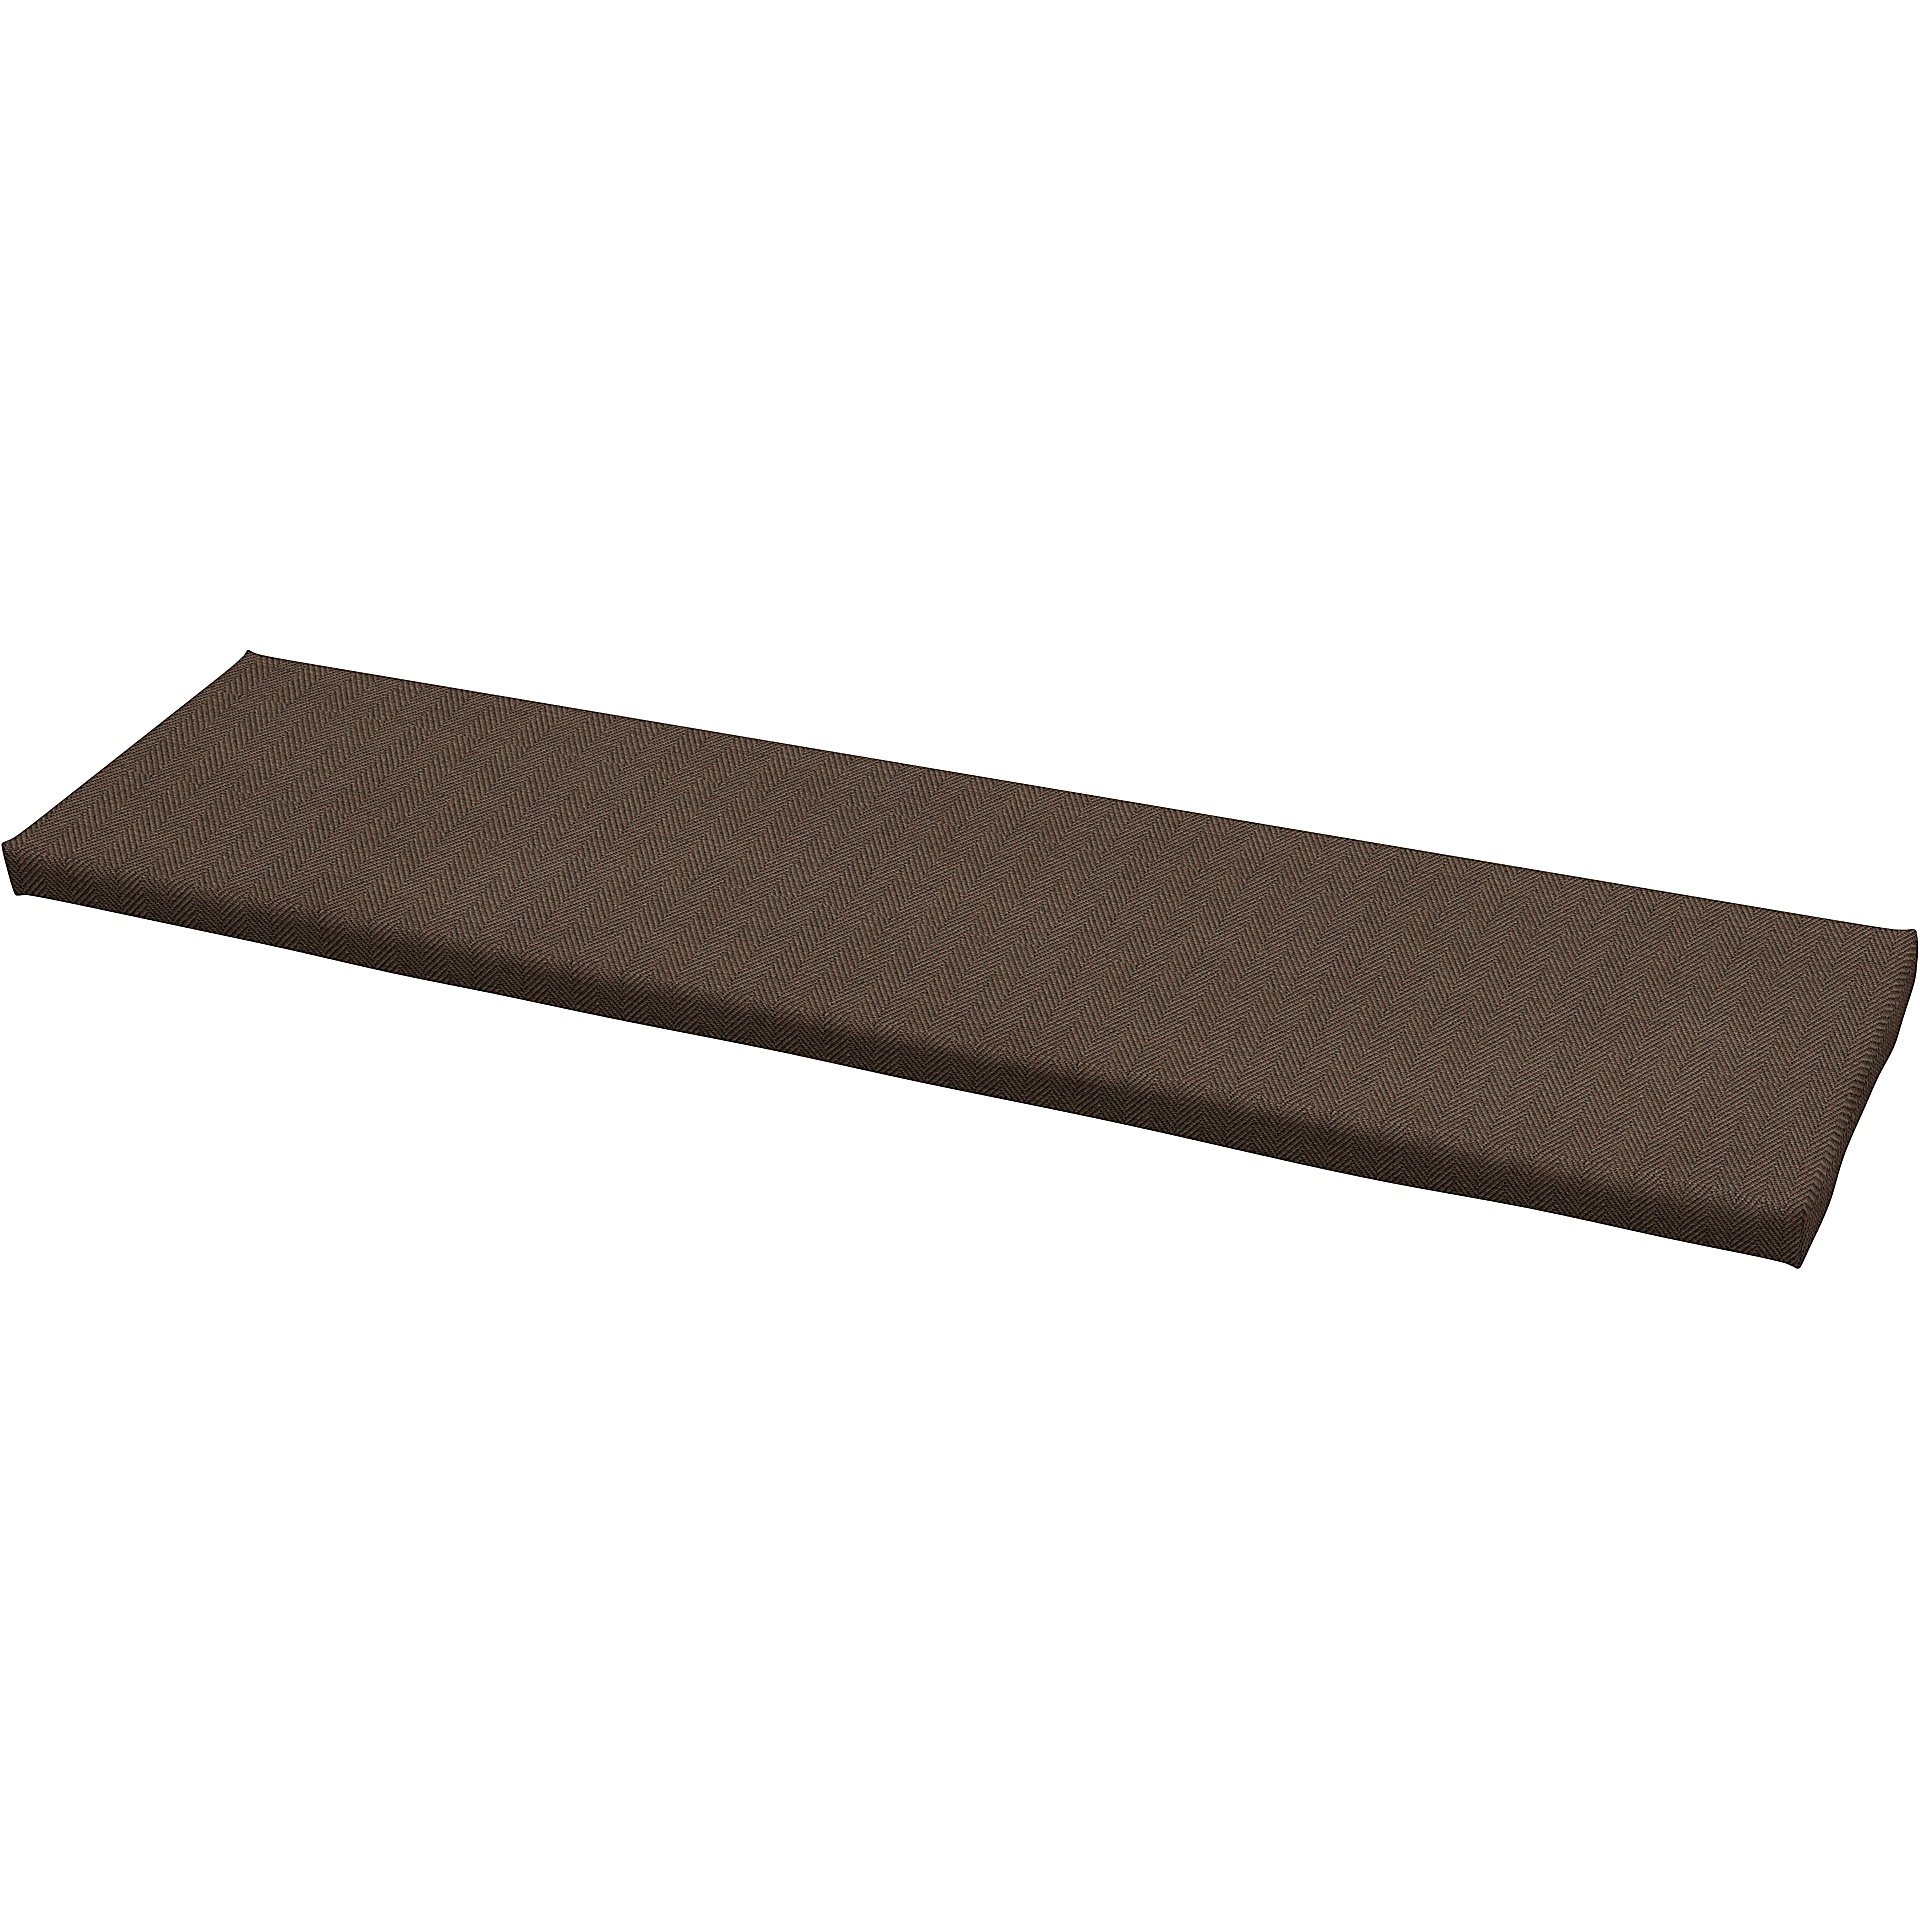 IKEA - Universal bench cushion cover 140x35x3,5 cm, Chocolate, Boucle & Texture - Bemz